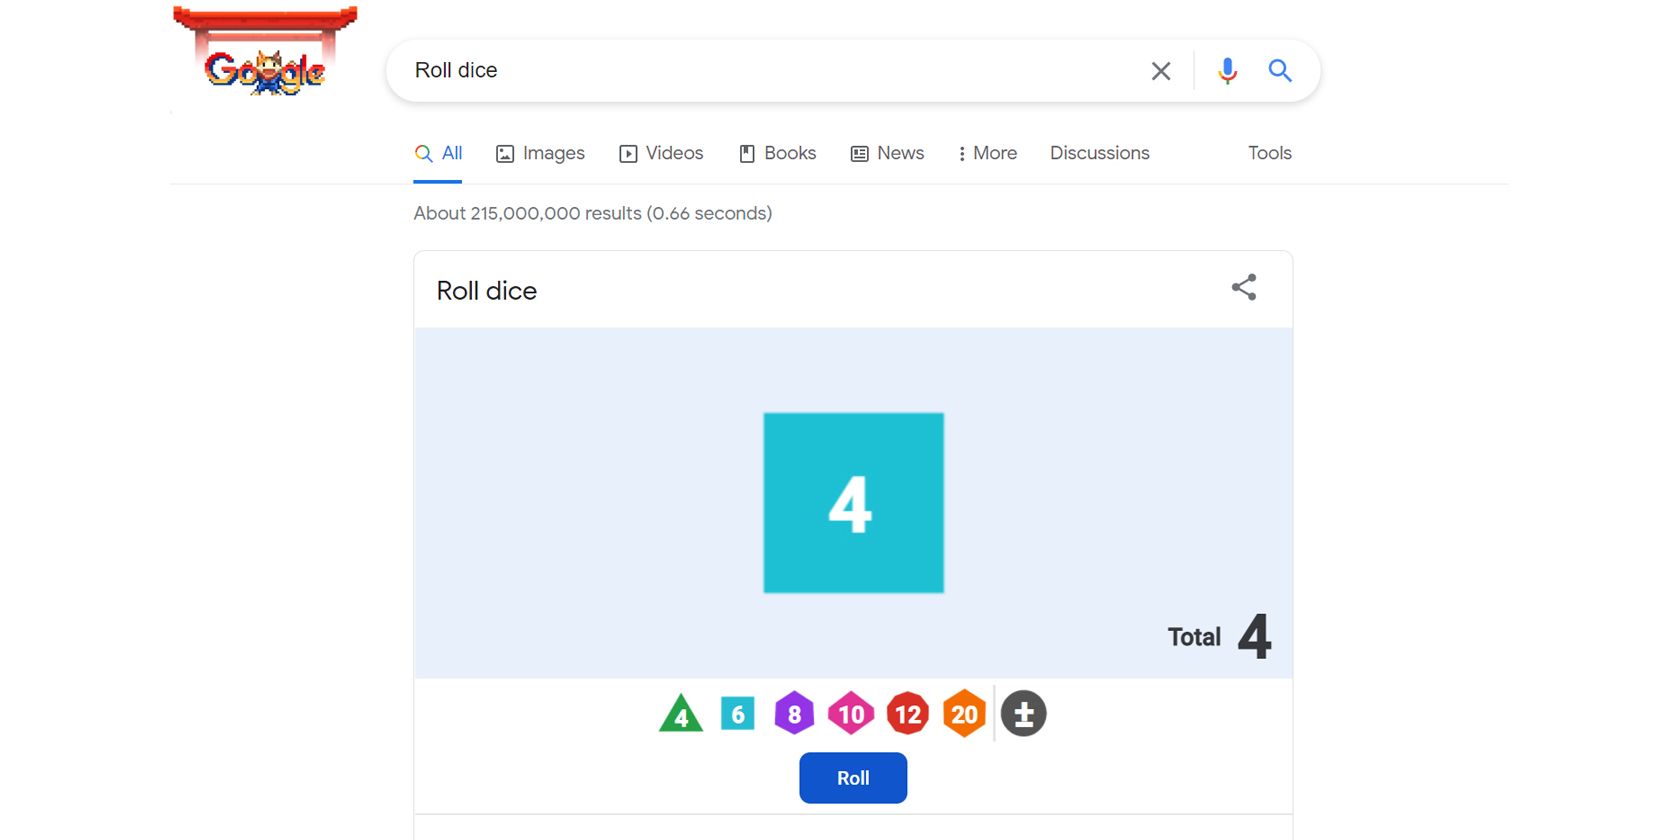 Google Roll dice screenshot